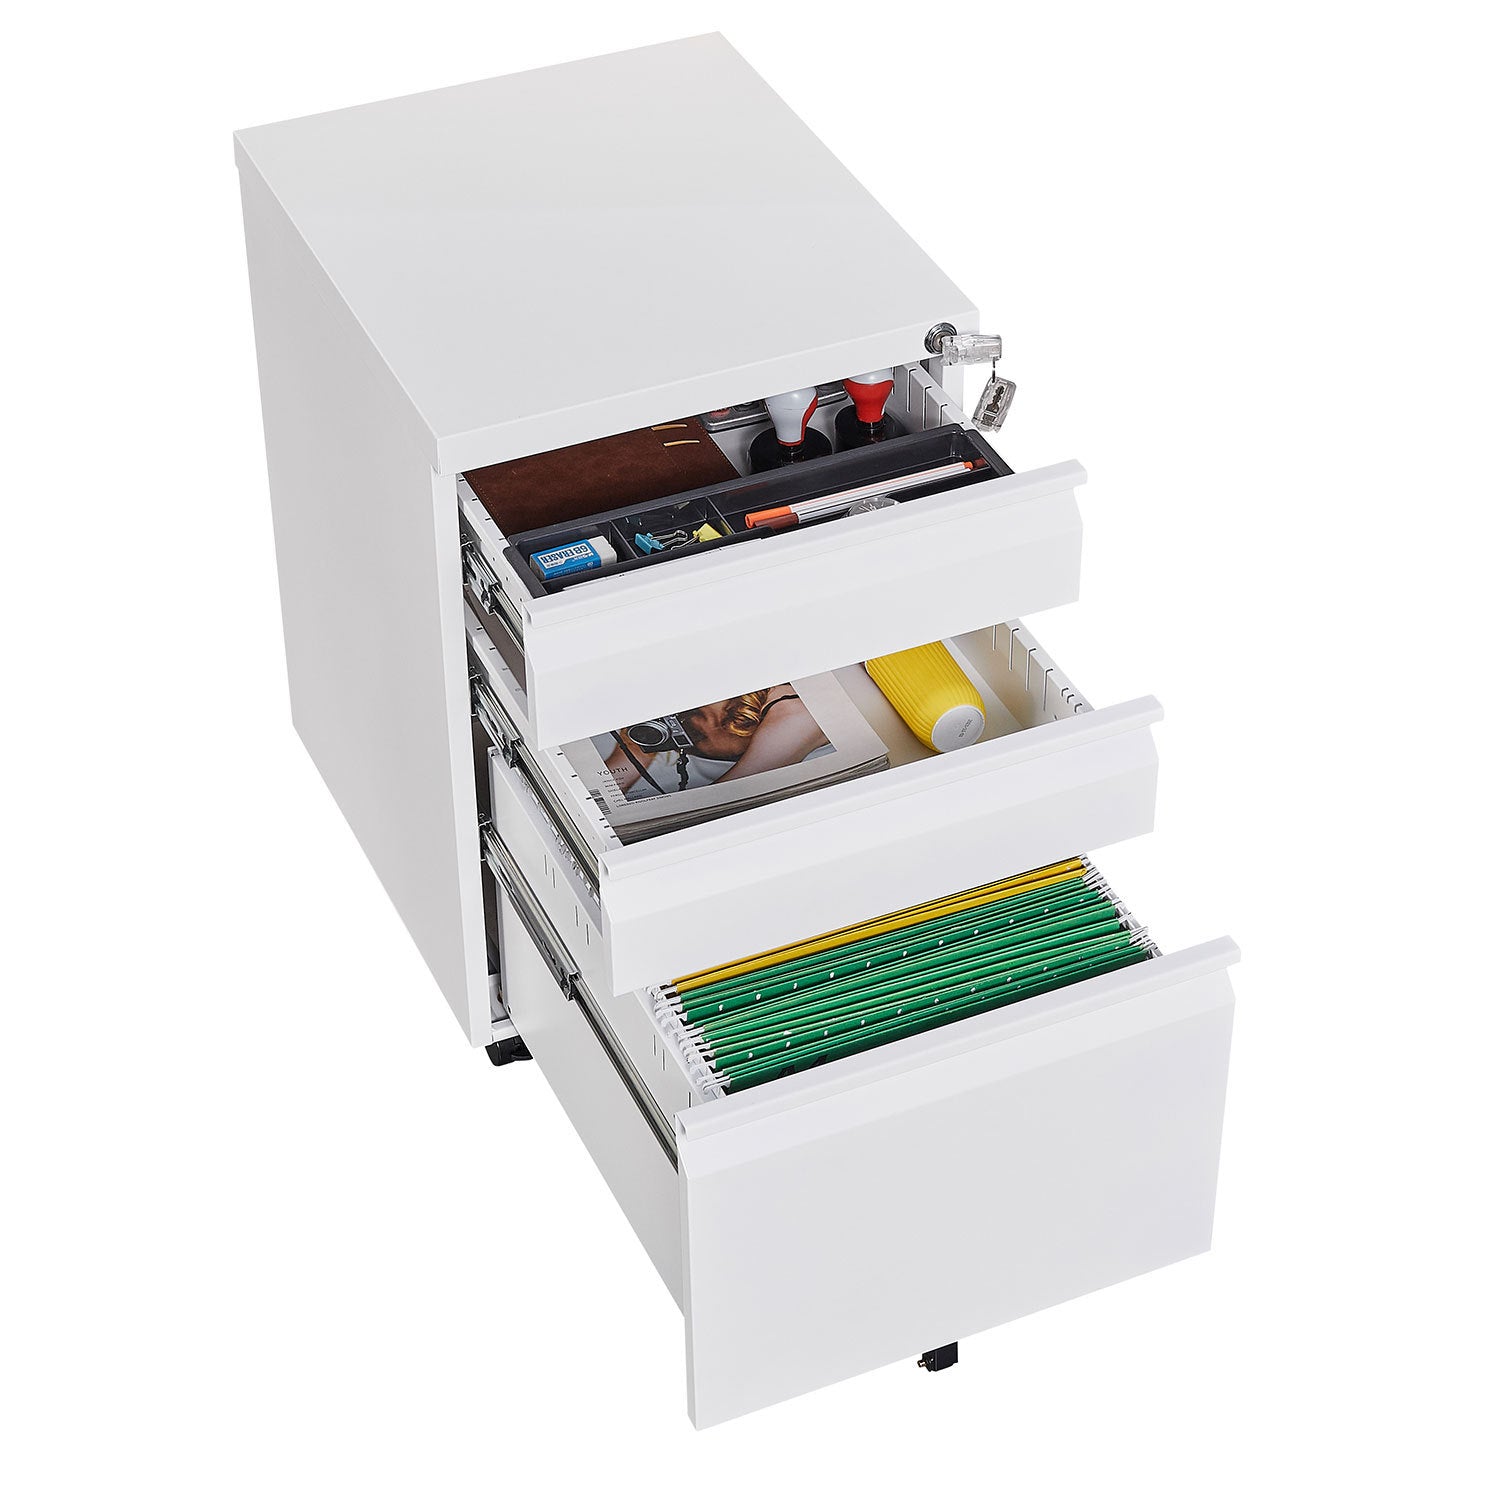 Vertical 3-Drawer White Metal Mobile Pedestal File Cabinet for Letter or Legal Size